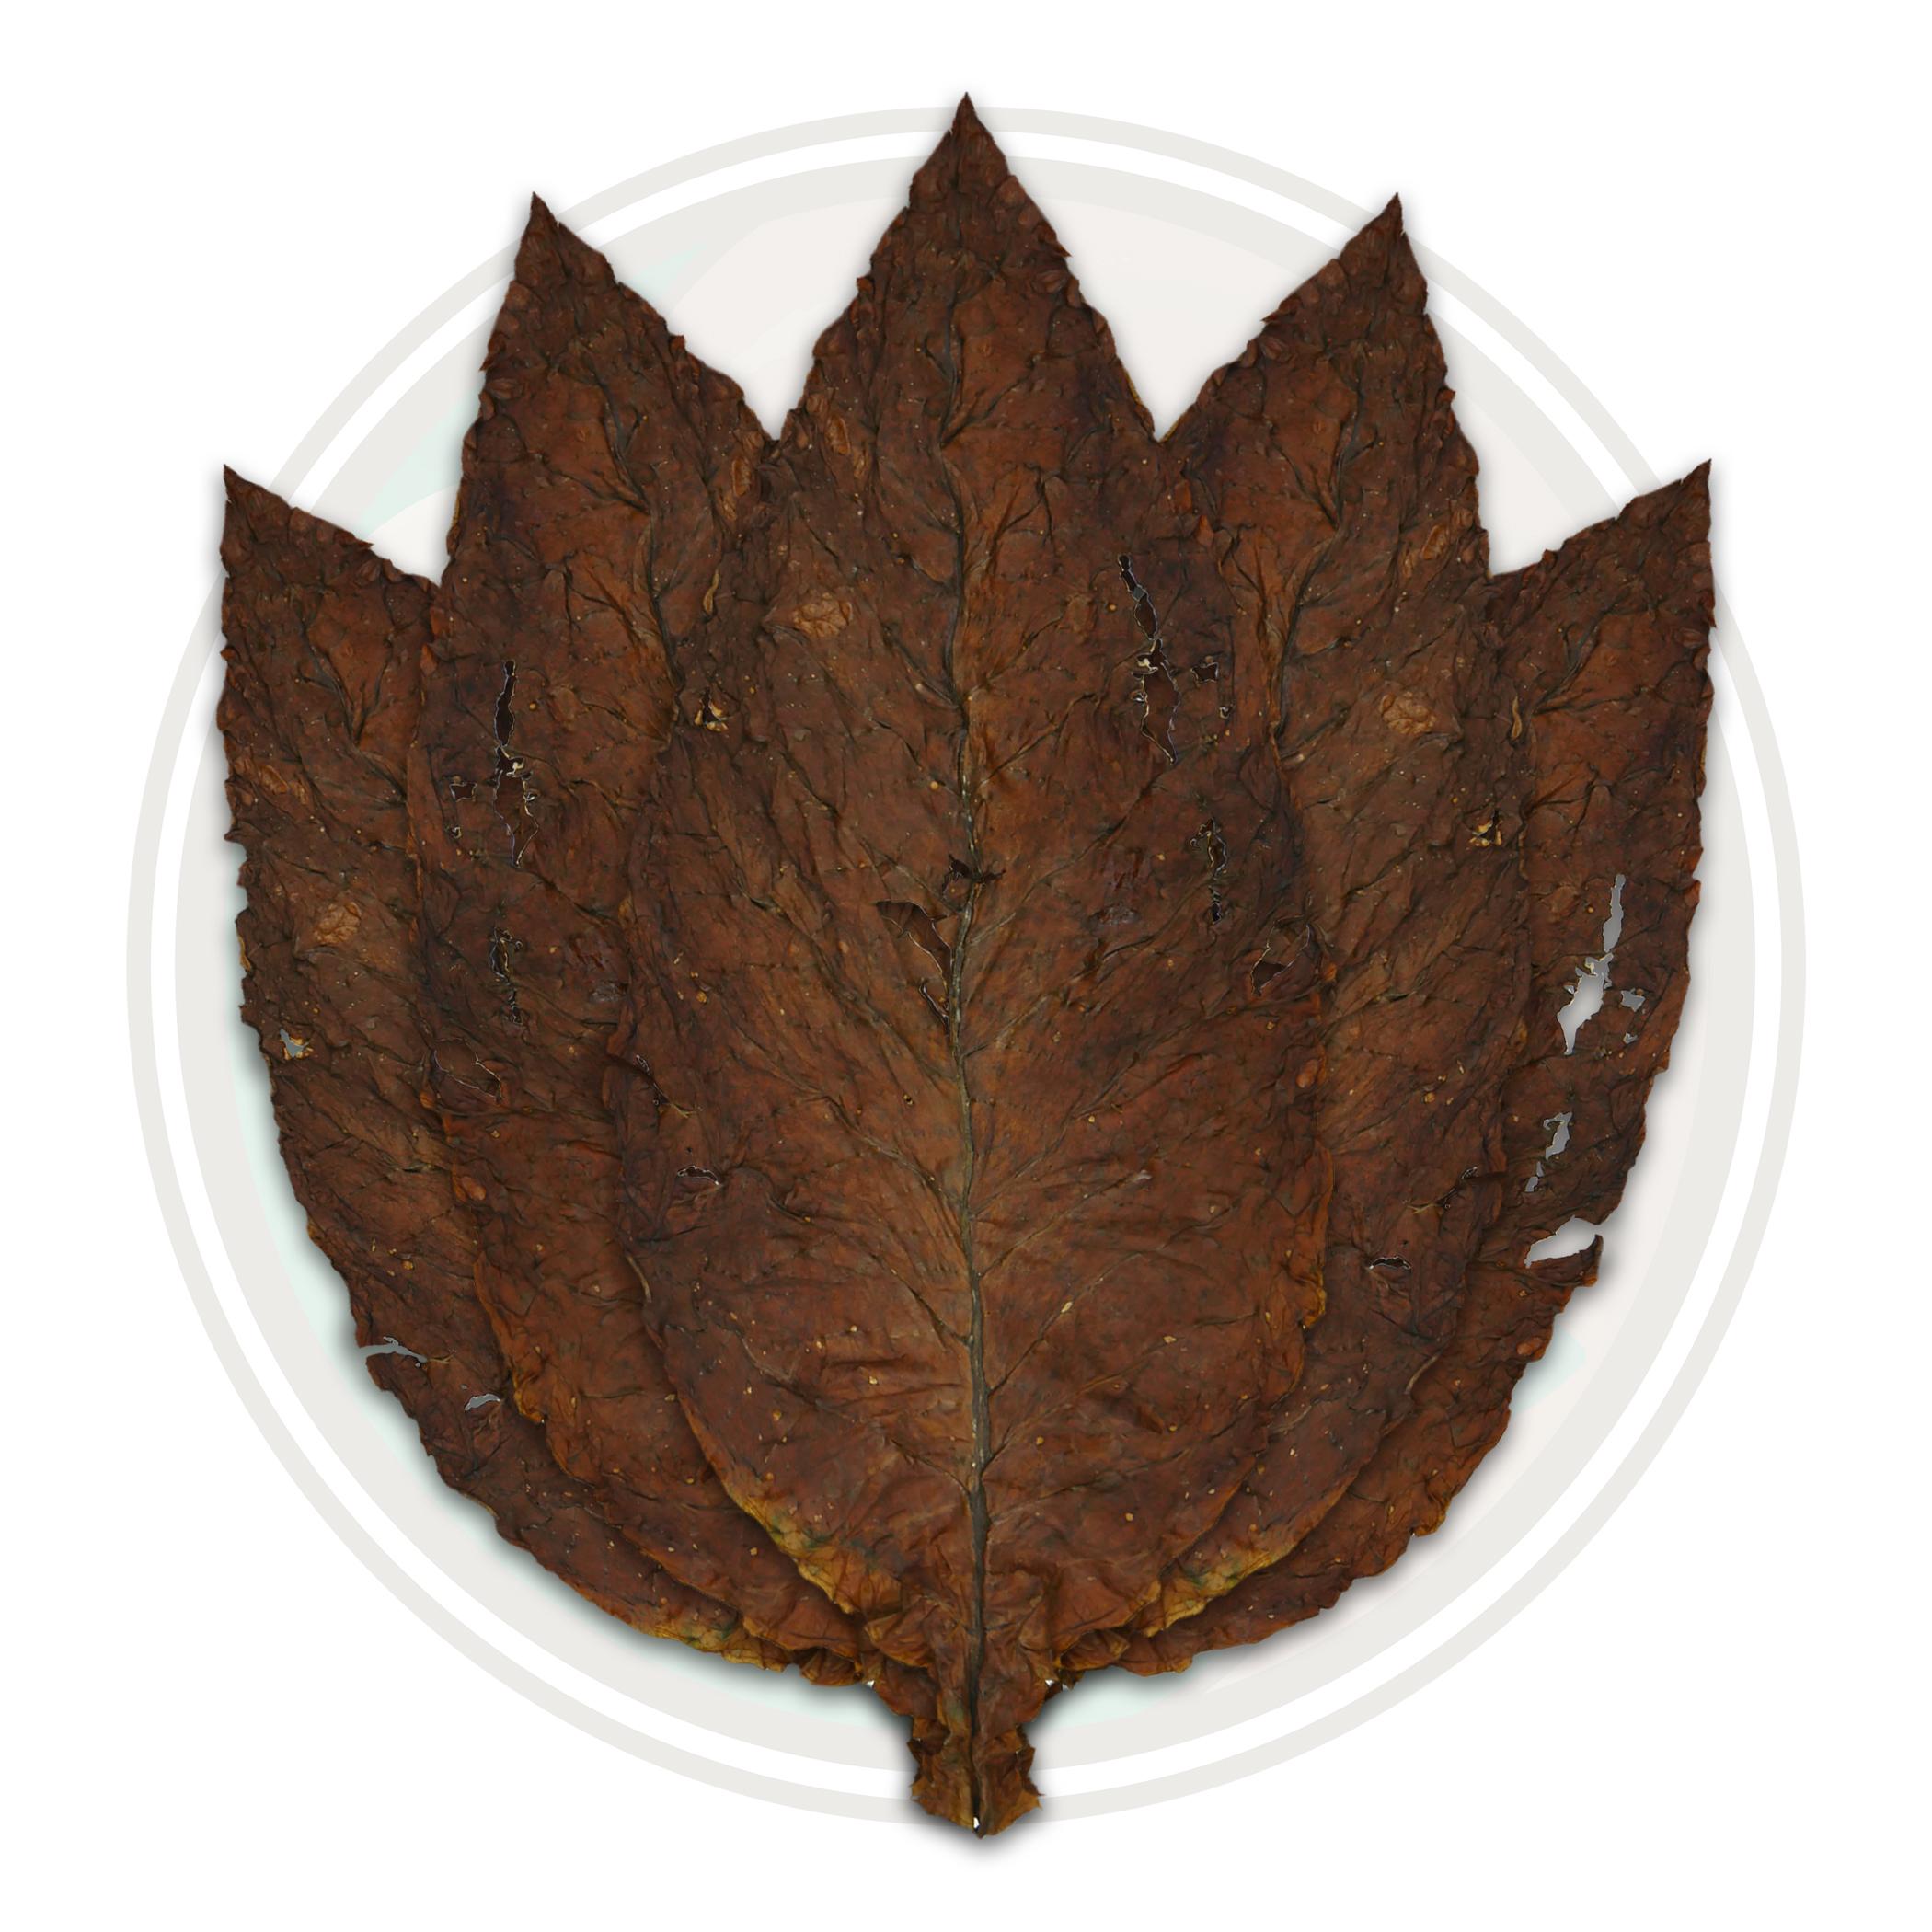 Grabba Leaf and Fronto Leaf - Lower quality DAC grabba leaf for sale online.